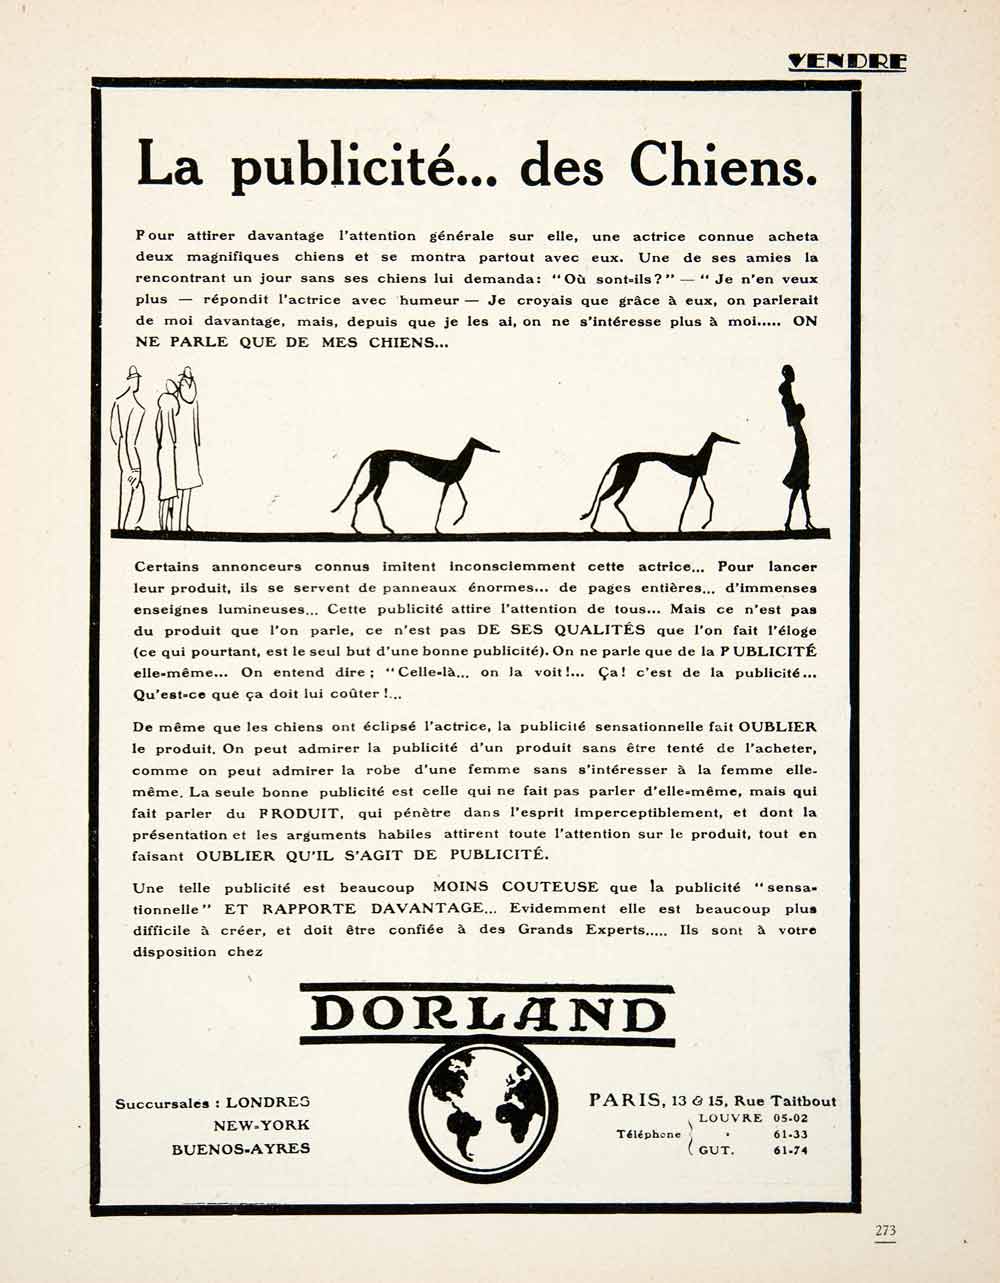 1926 Ad Dorland 13 Rue Taitbout Paris Advertising Agency France Publicity VEN4